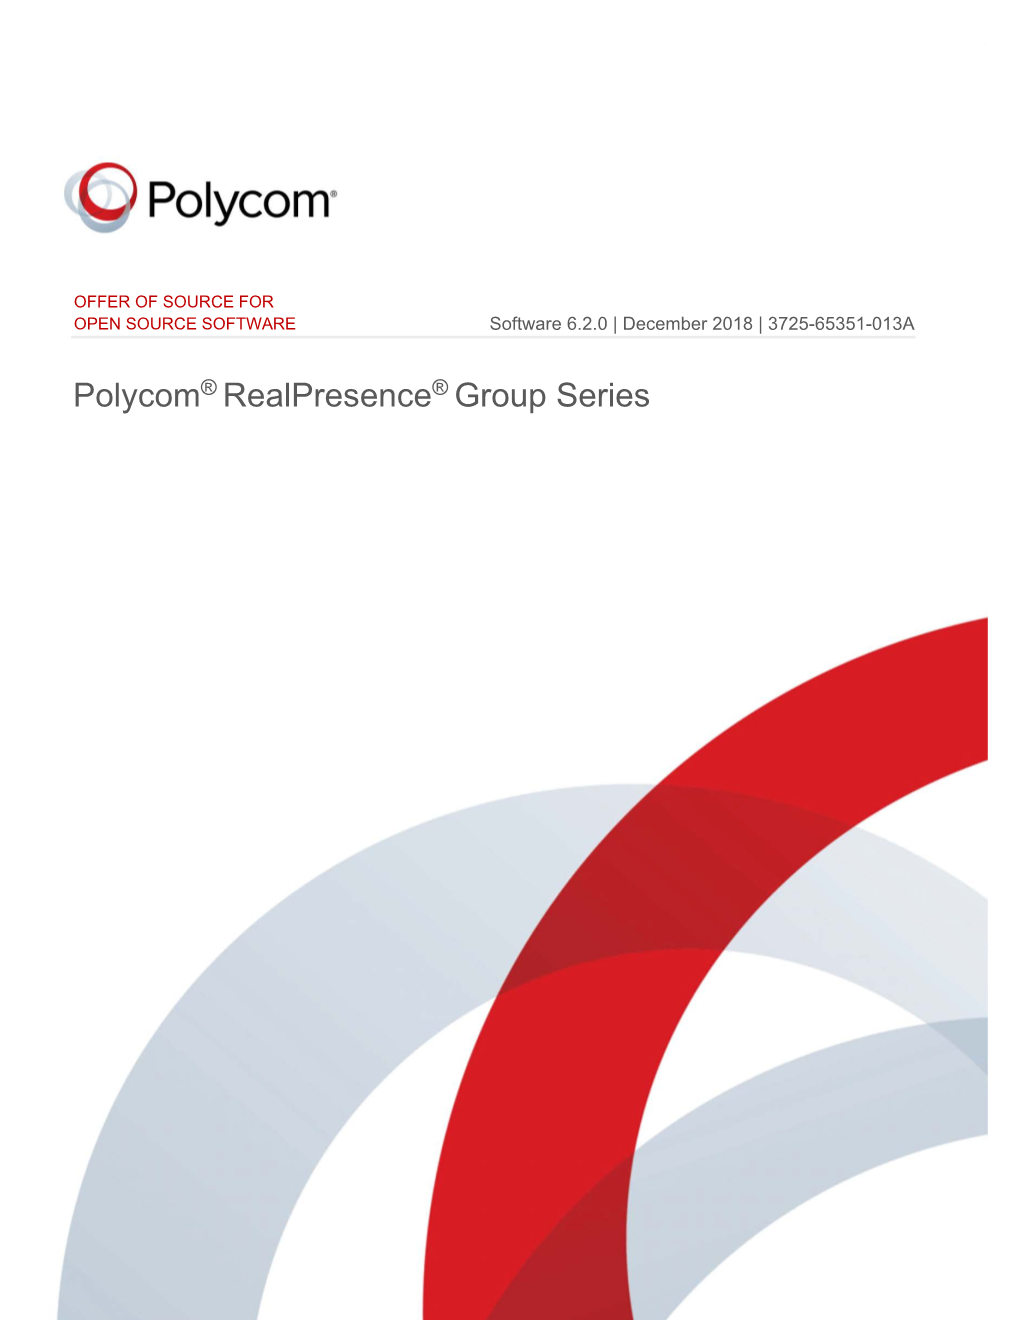 Polycom Realpresence Group Series Offer Of